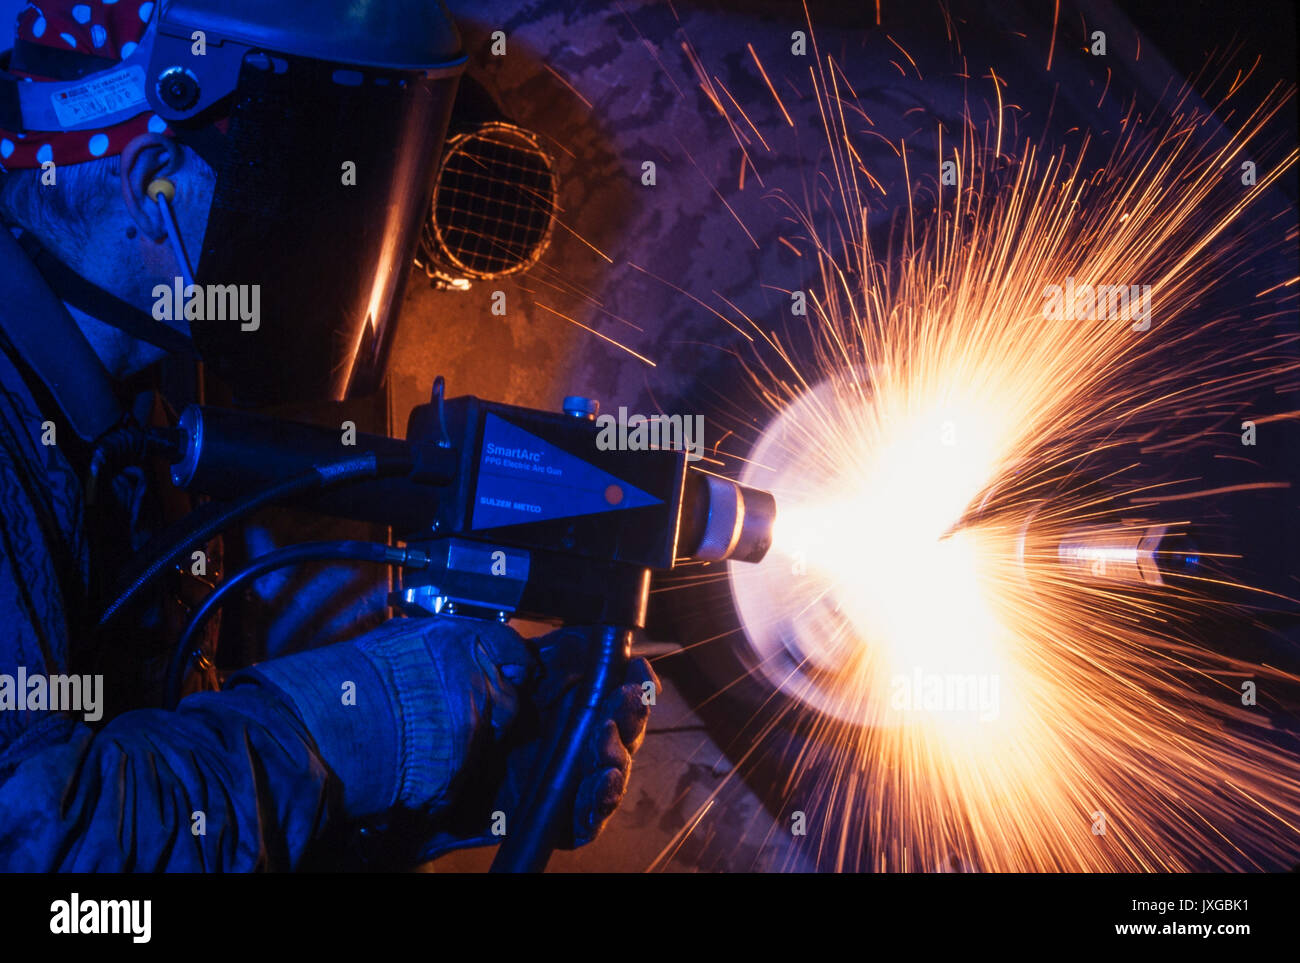 High tech precision metal parts fabrication. Stock Photo